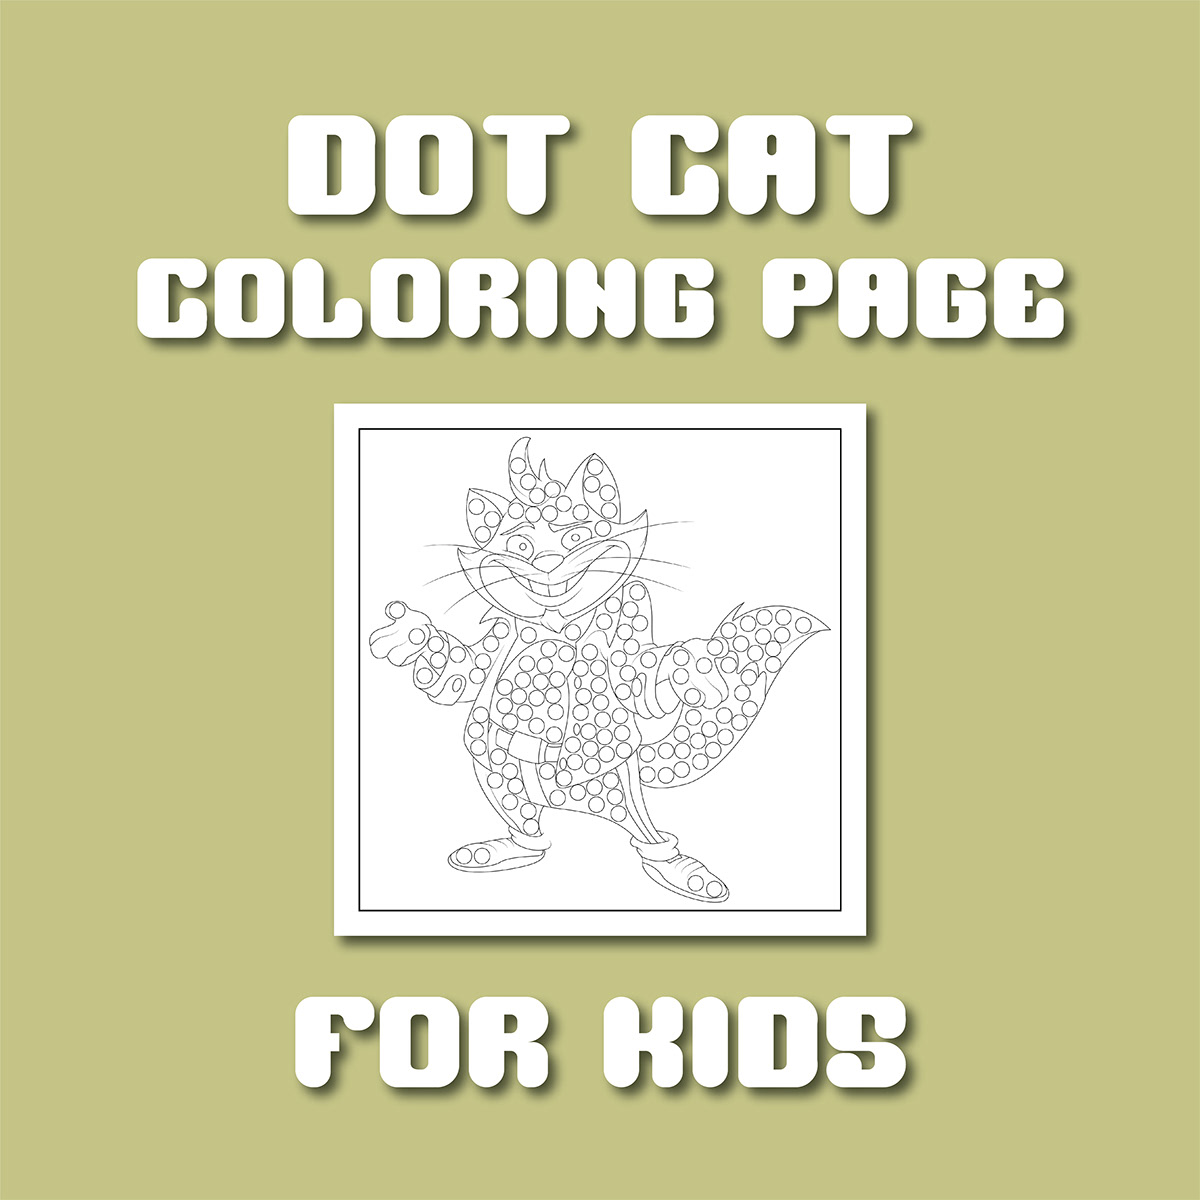 coloring dot dots Cat adobe illustrator Graphic Designer coloringbook coloringpages Dotcat DOTTODOT